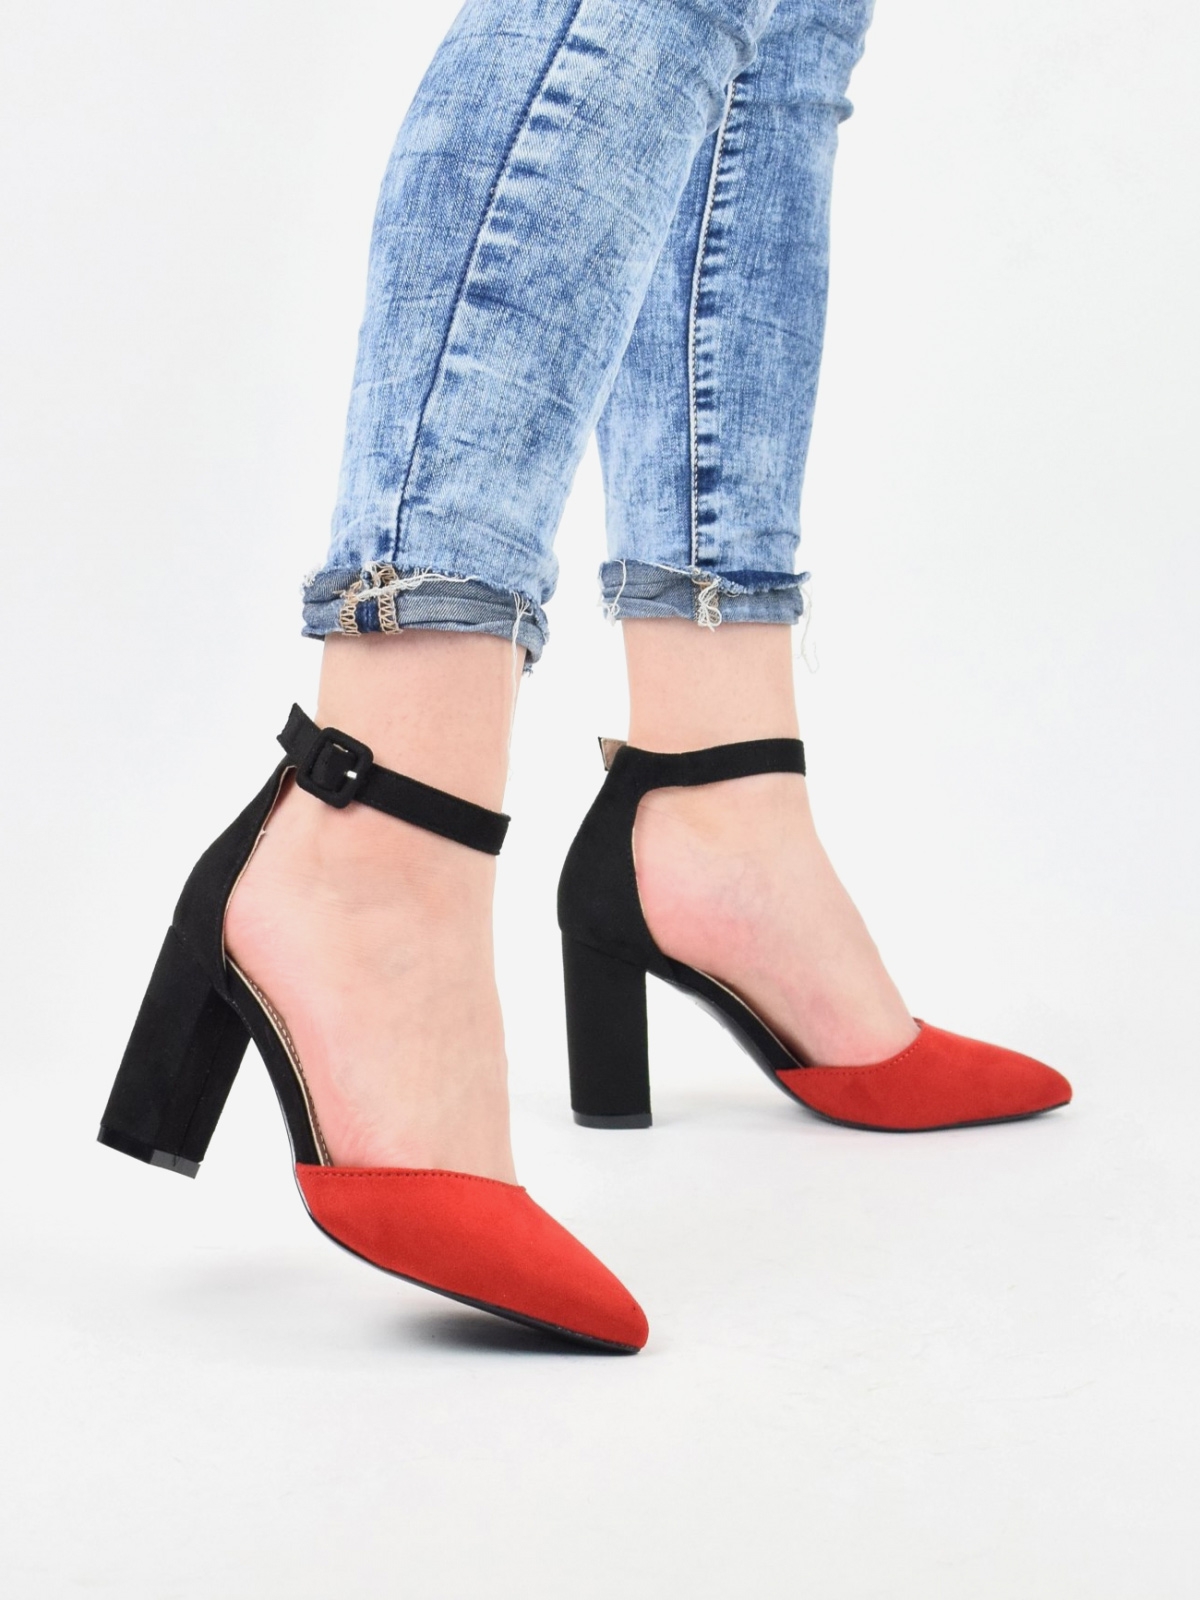 Classic design high heels in red